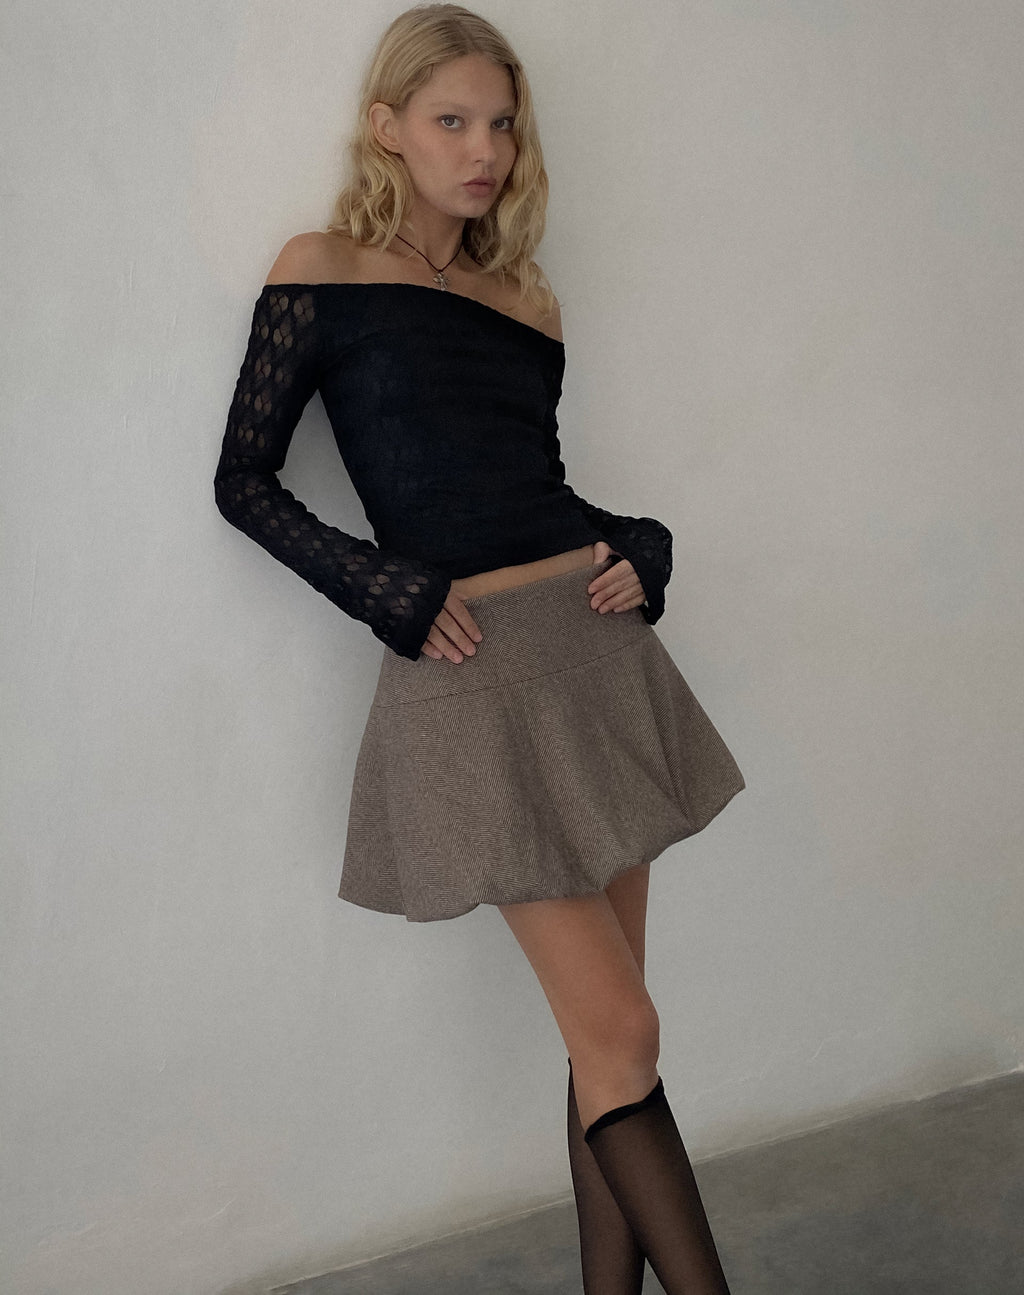 Neira Long Sleeve Bardot Top in Textured Knit Black (Top bardot à manches longues en tricot texturé)